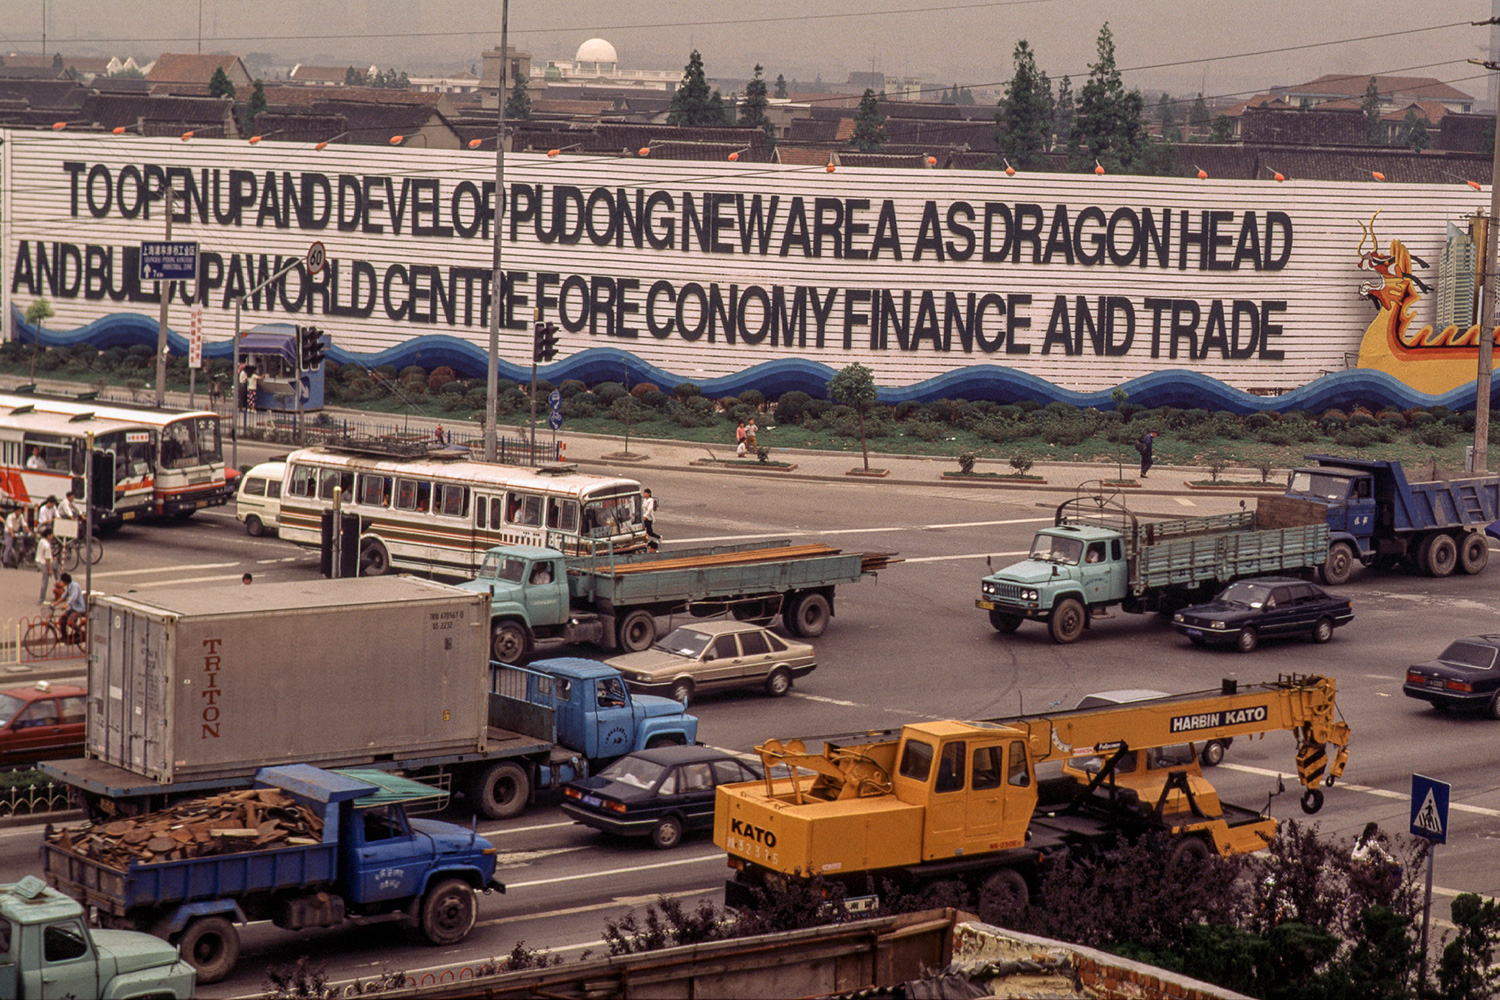 Government propaganda in Pudong near Lujiazui, 1996.